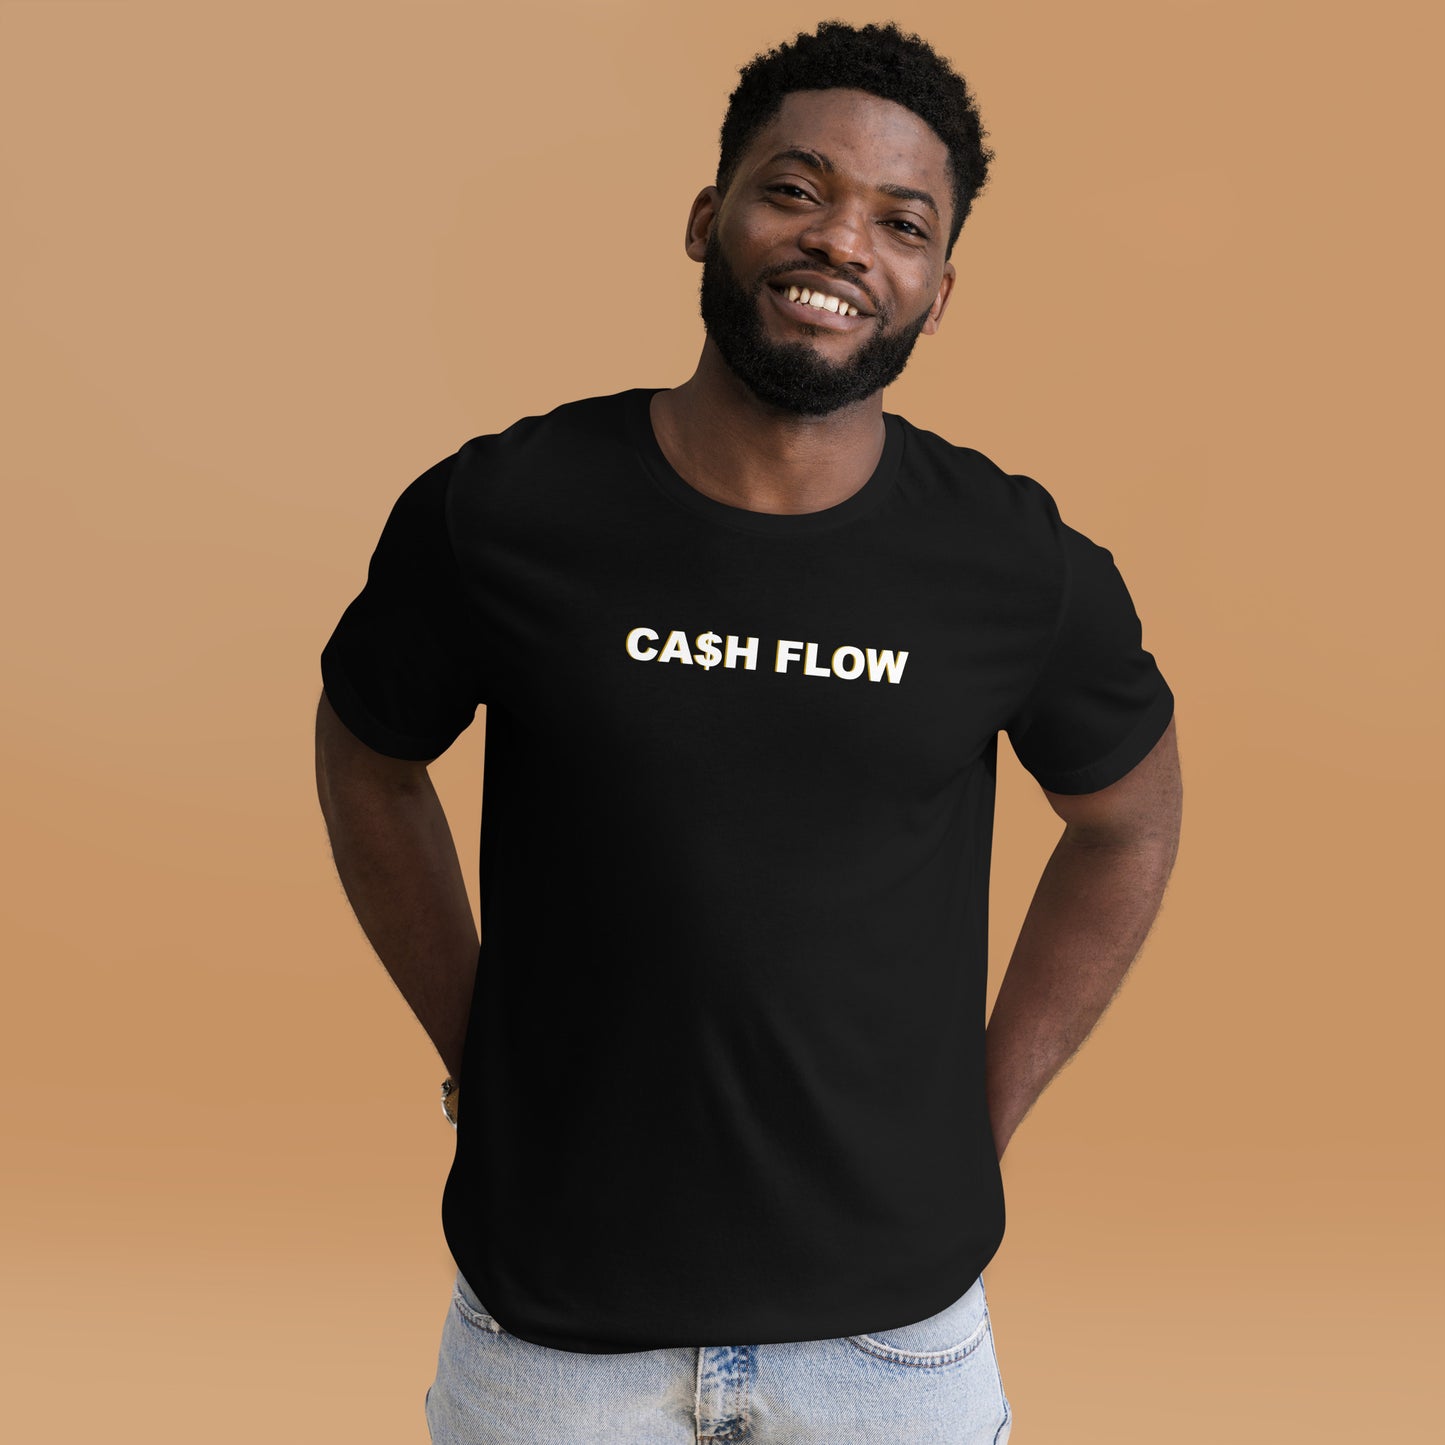 CA$H FLOW - White Text - Gold Edge - T-Shirt